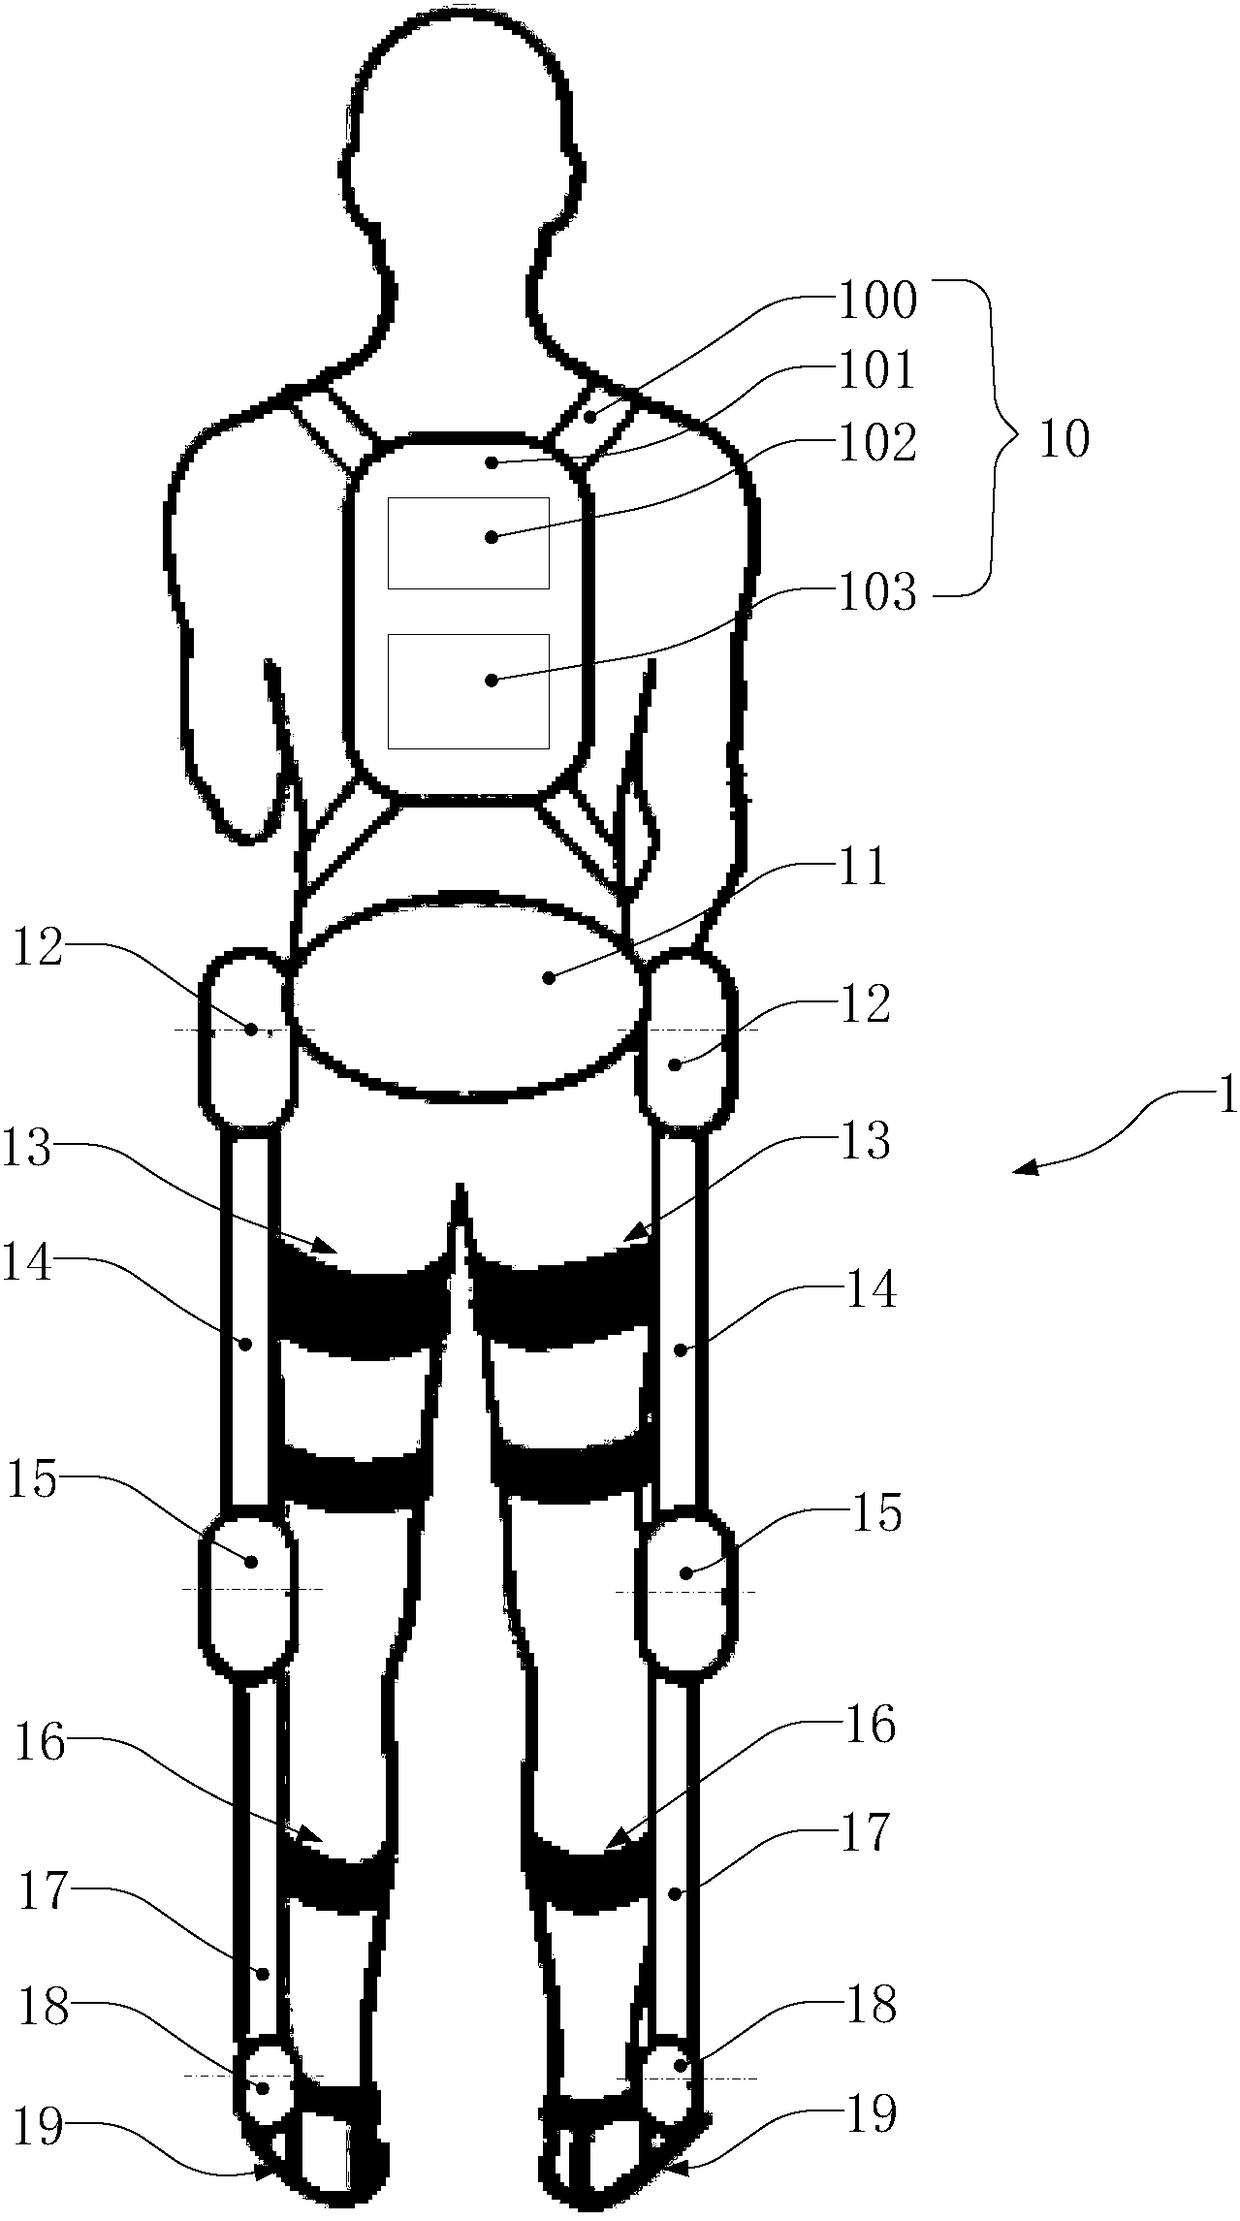 Lower limb rehabilitation exoskeleton system and walking control method thereof